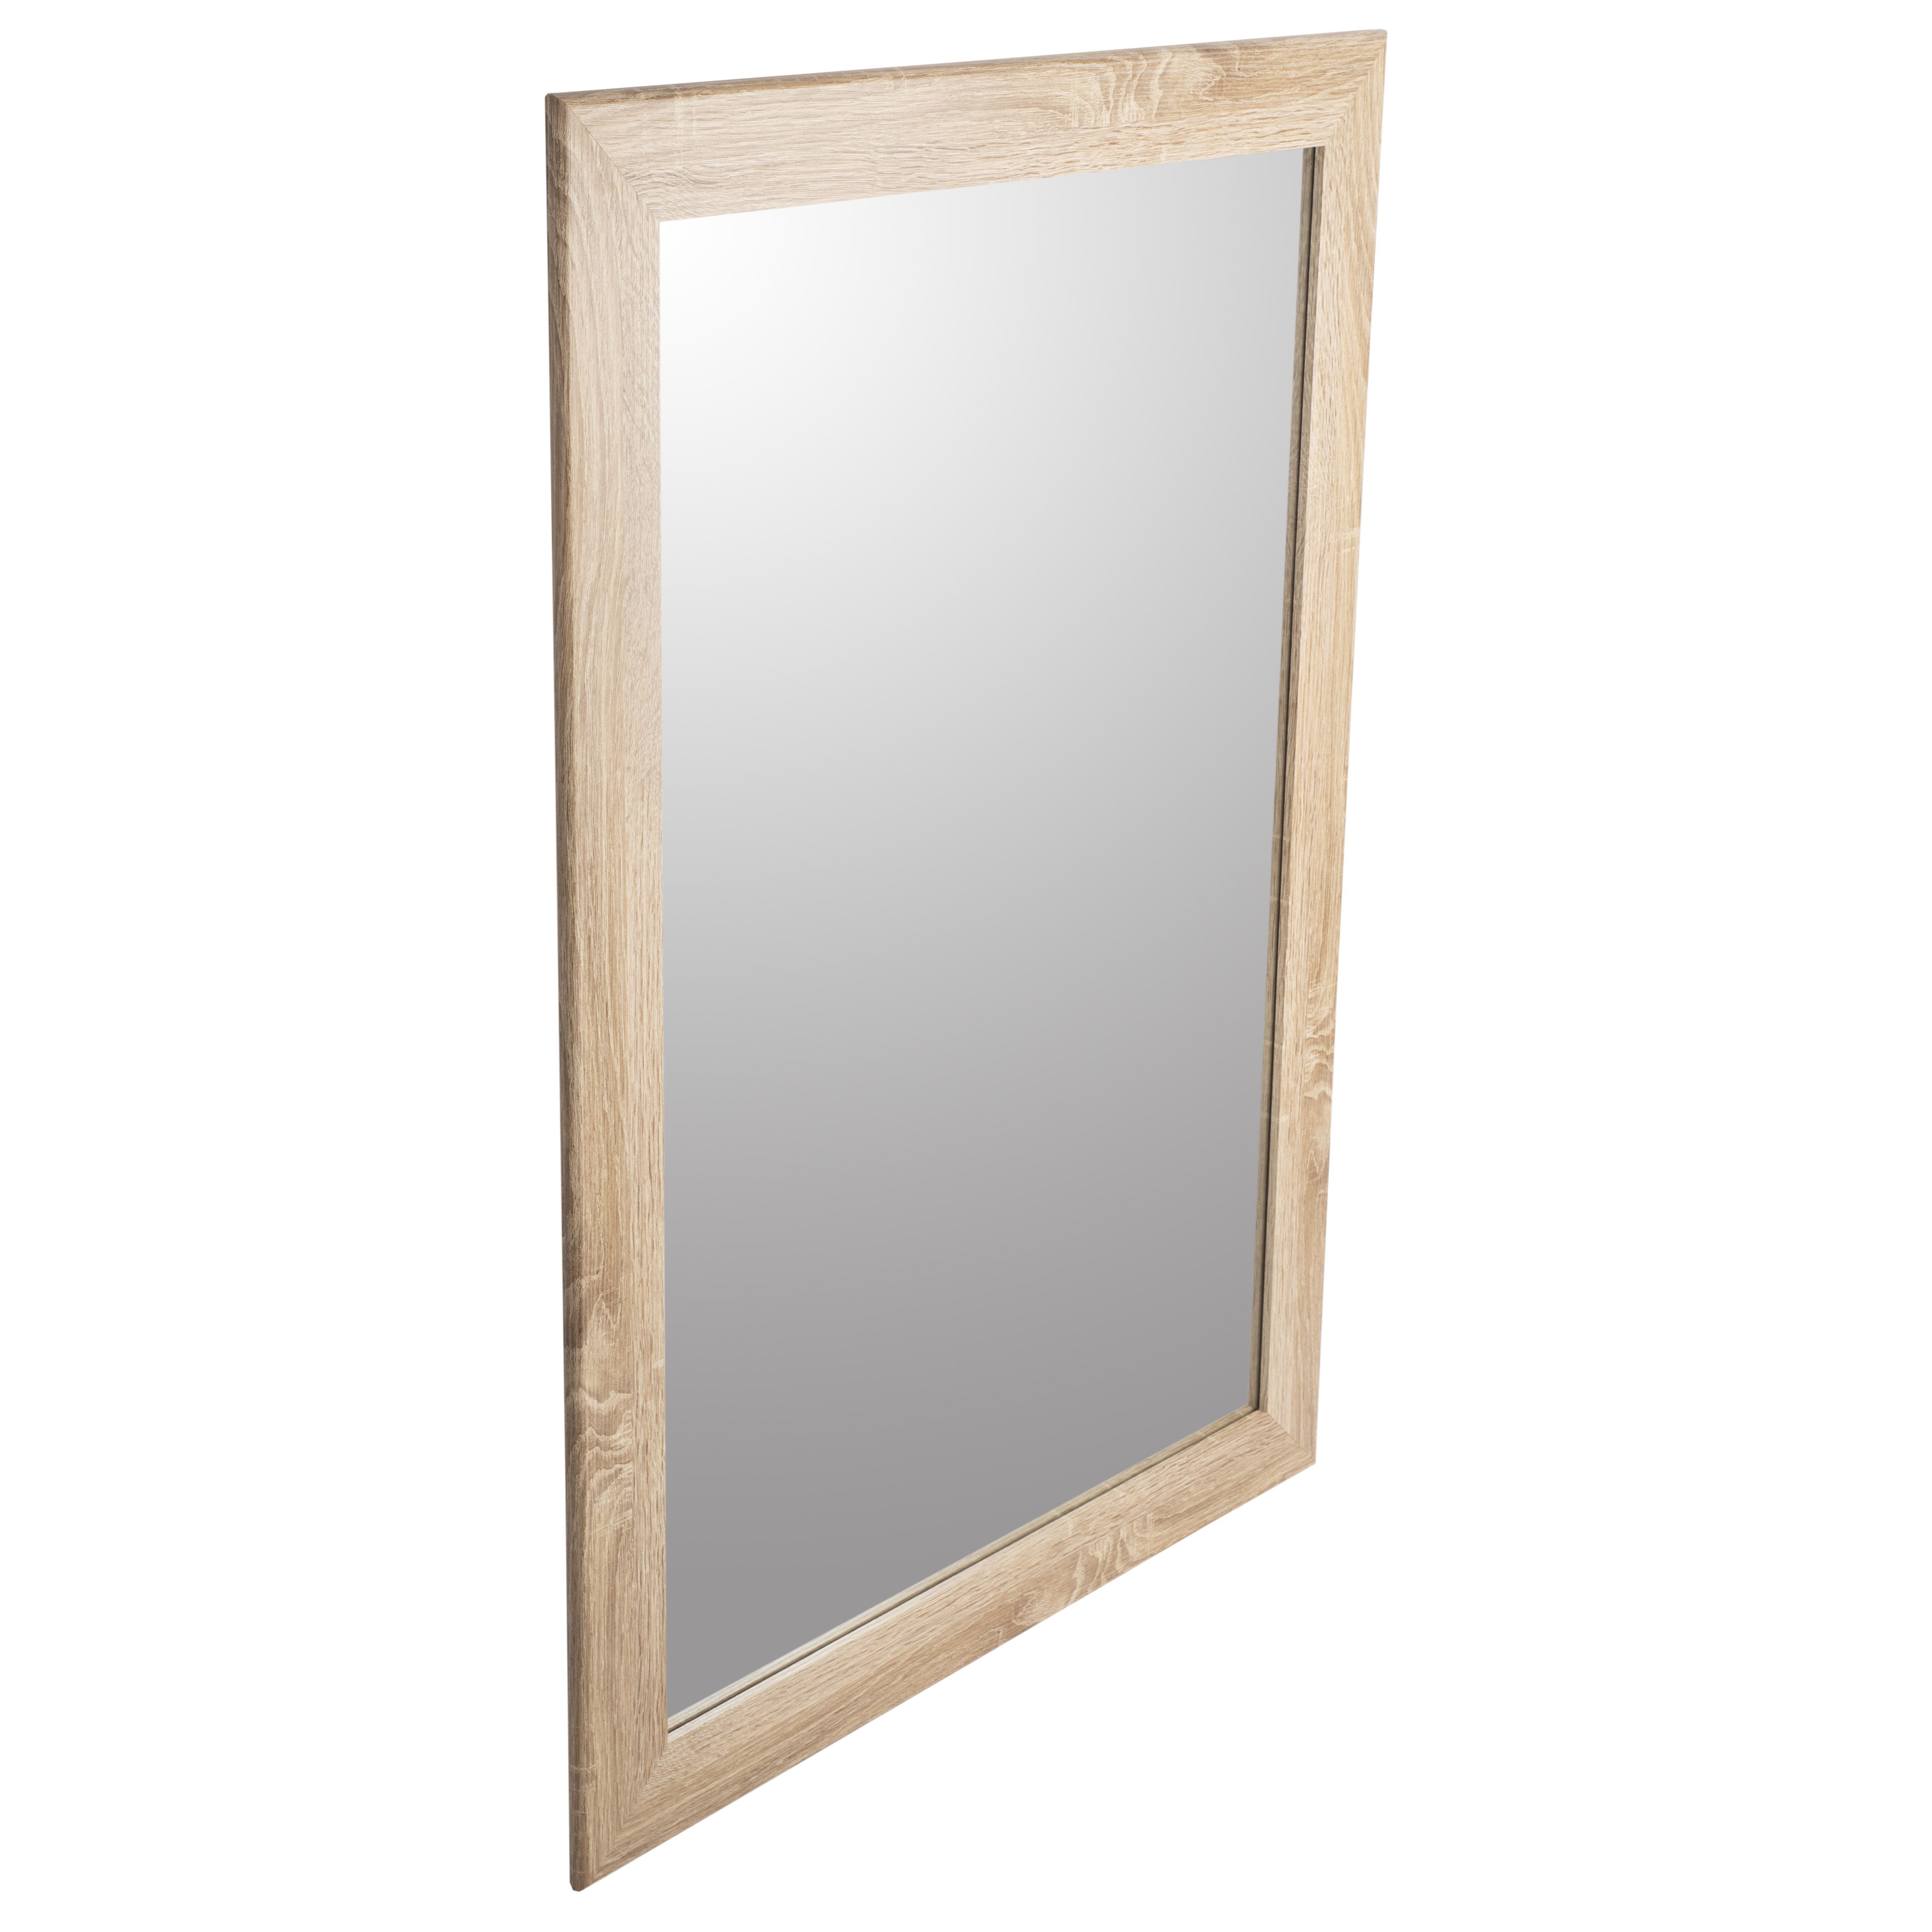 Andino Light oak effect Rectangular Wall-mounted Framed mirror, (H)103cm (W)73cm